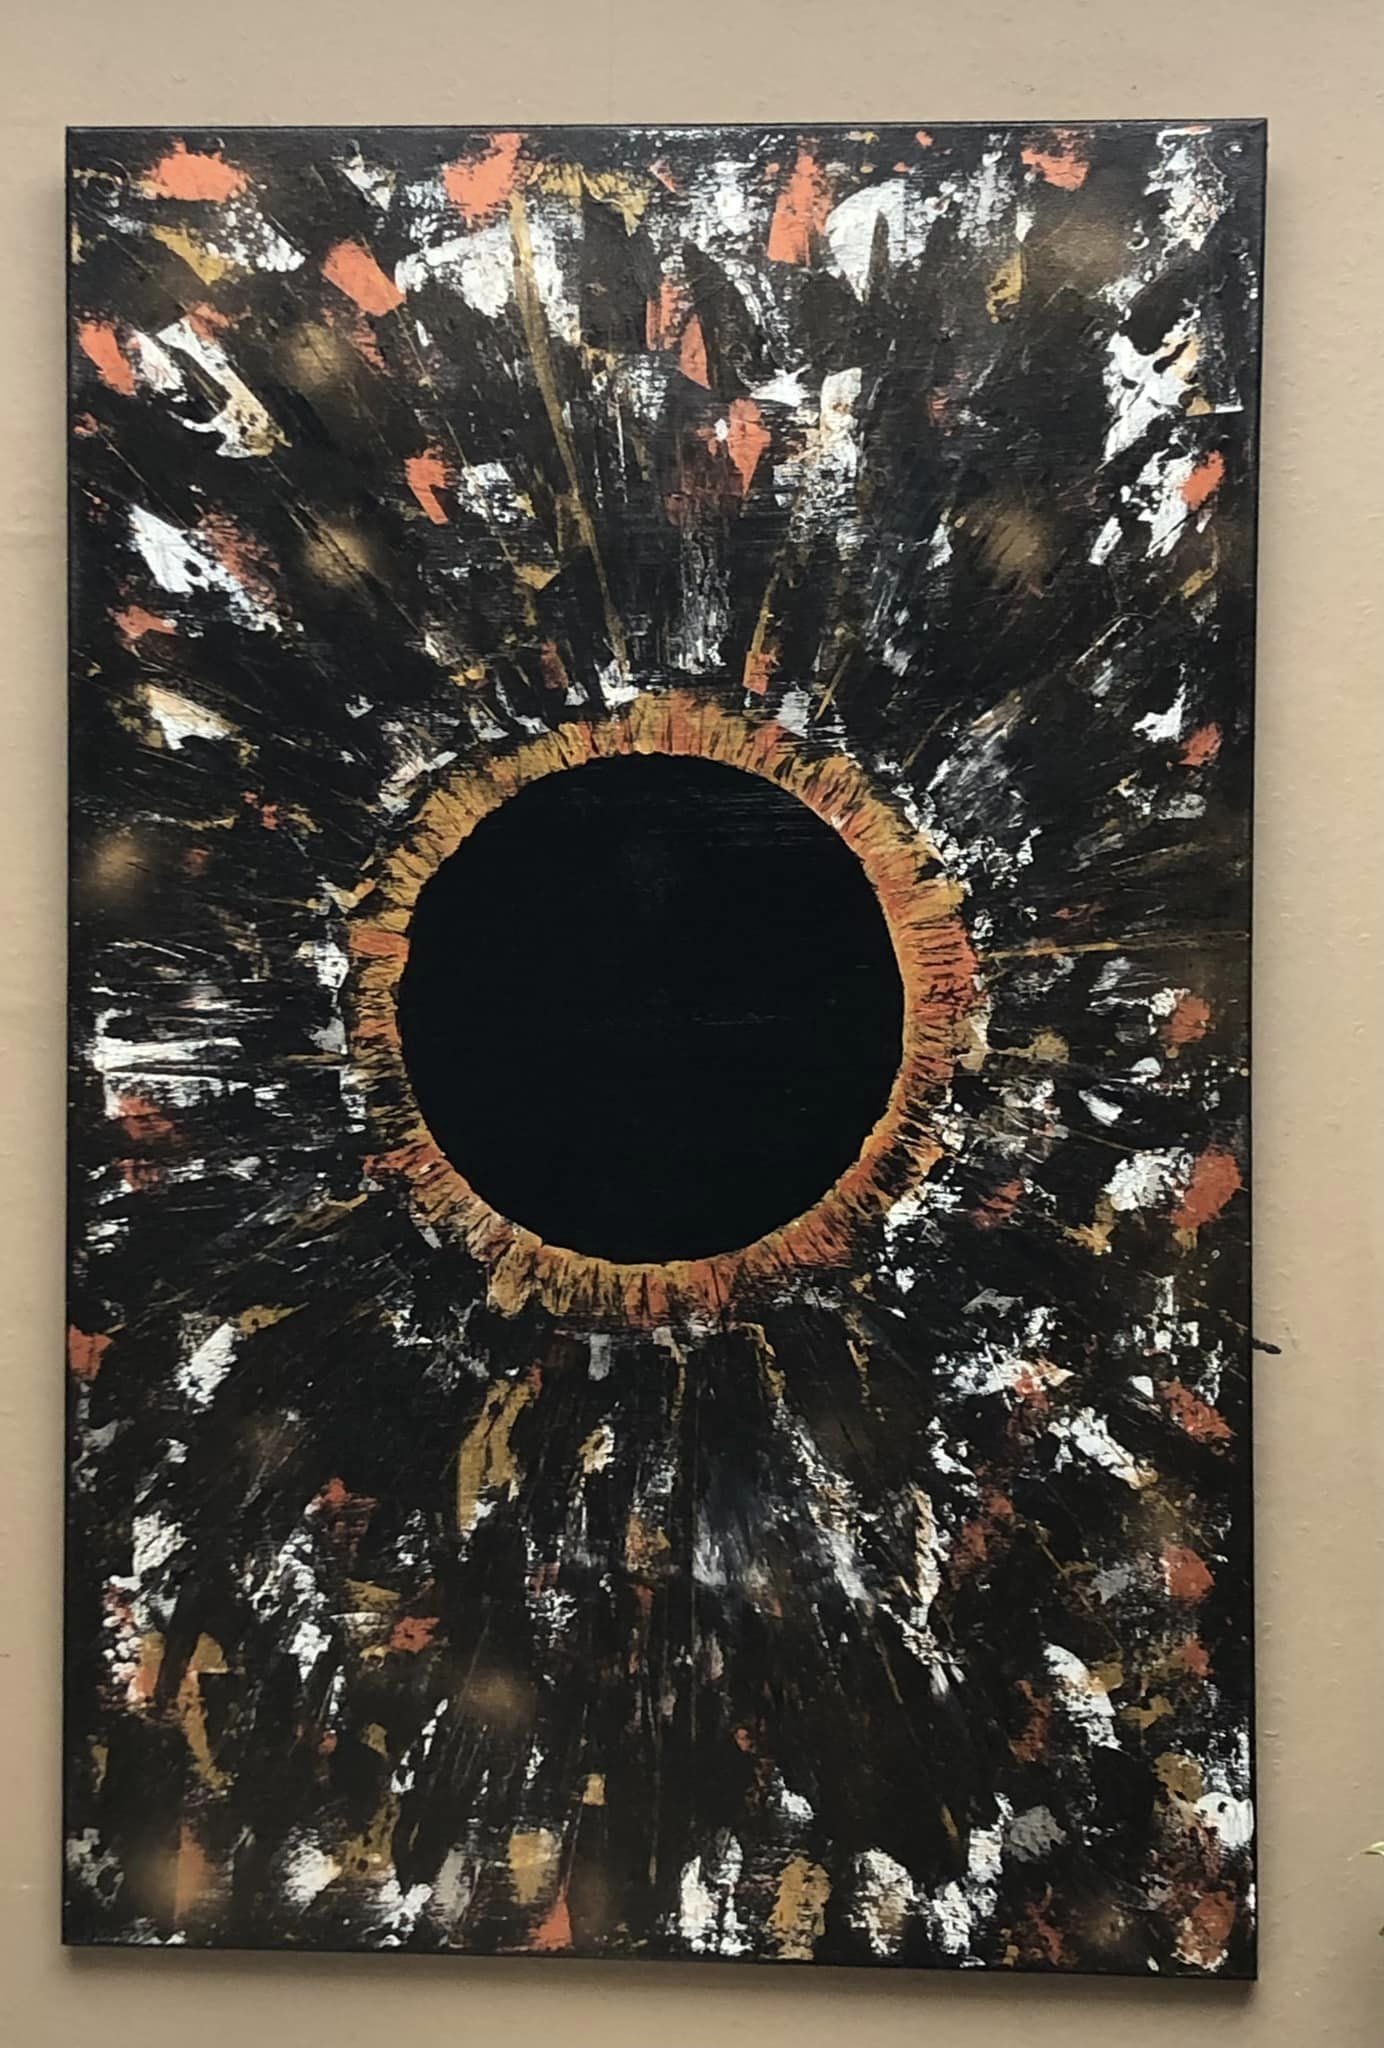 Black hole sun (75x155) € 570